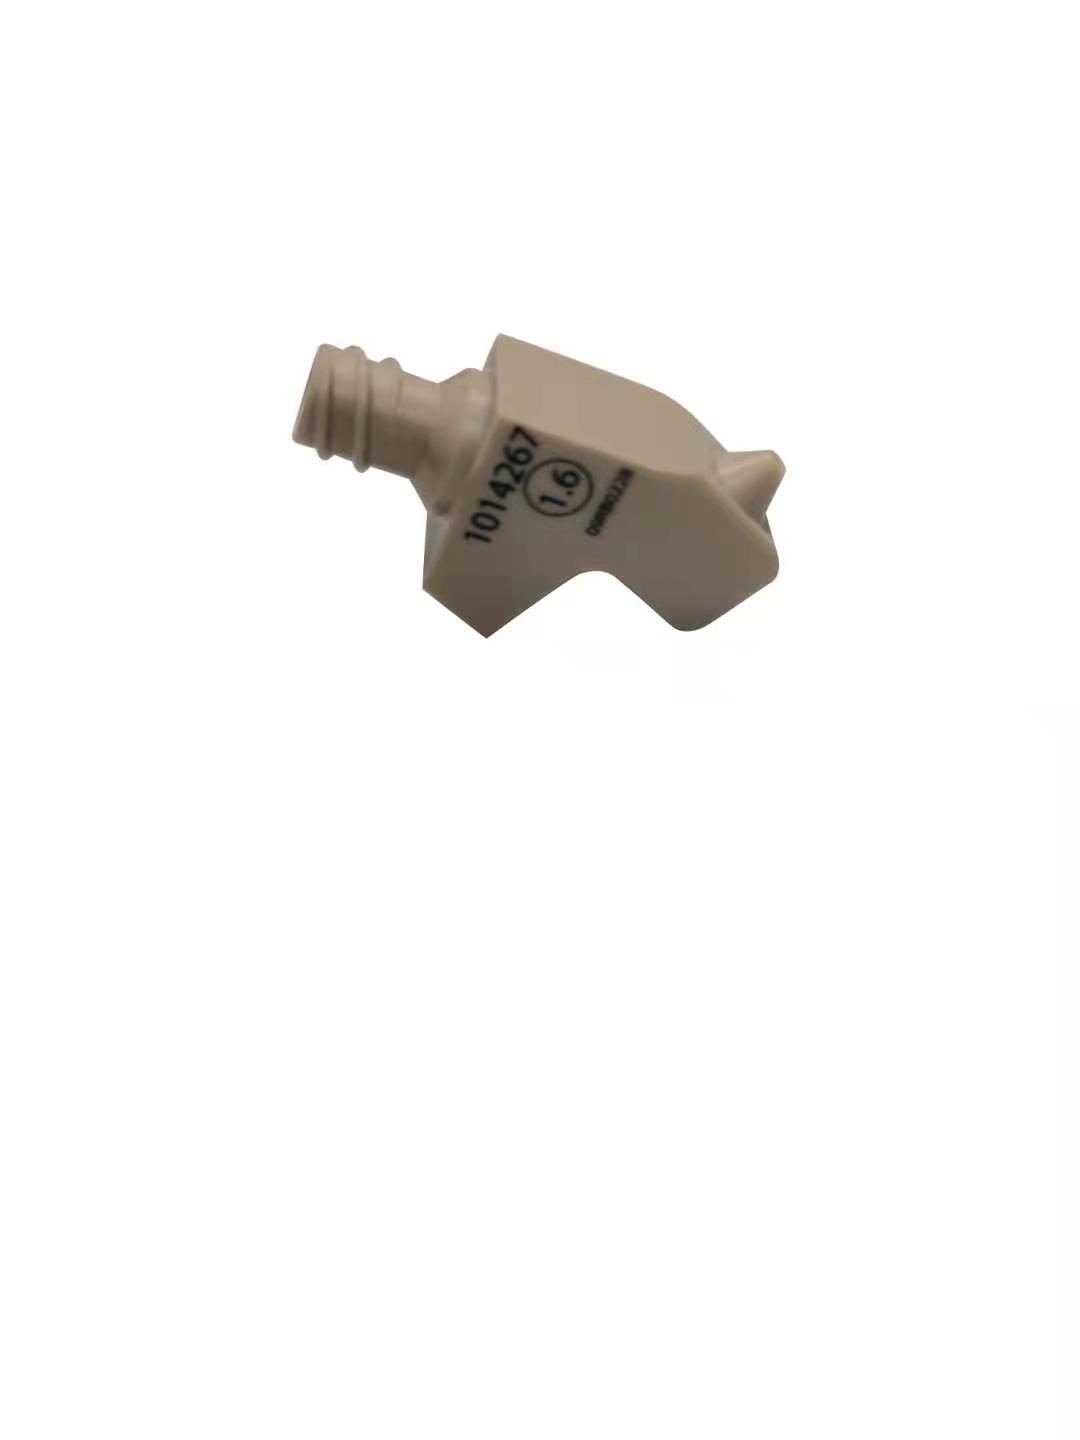 Cartridge base CCI PEEK, integrated Luer-Lock Connector